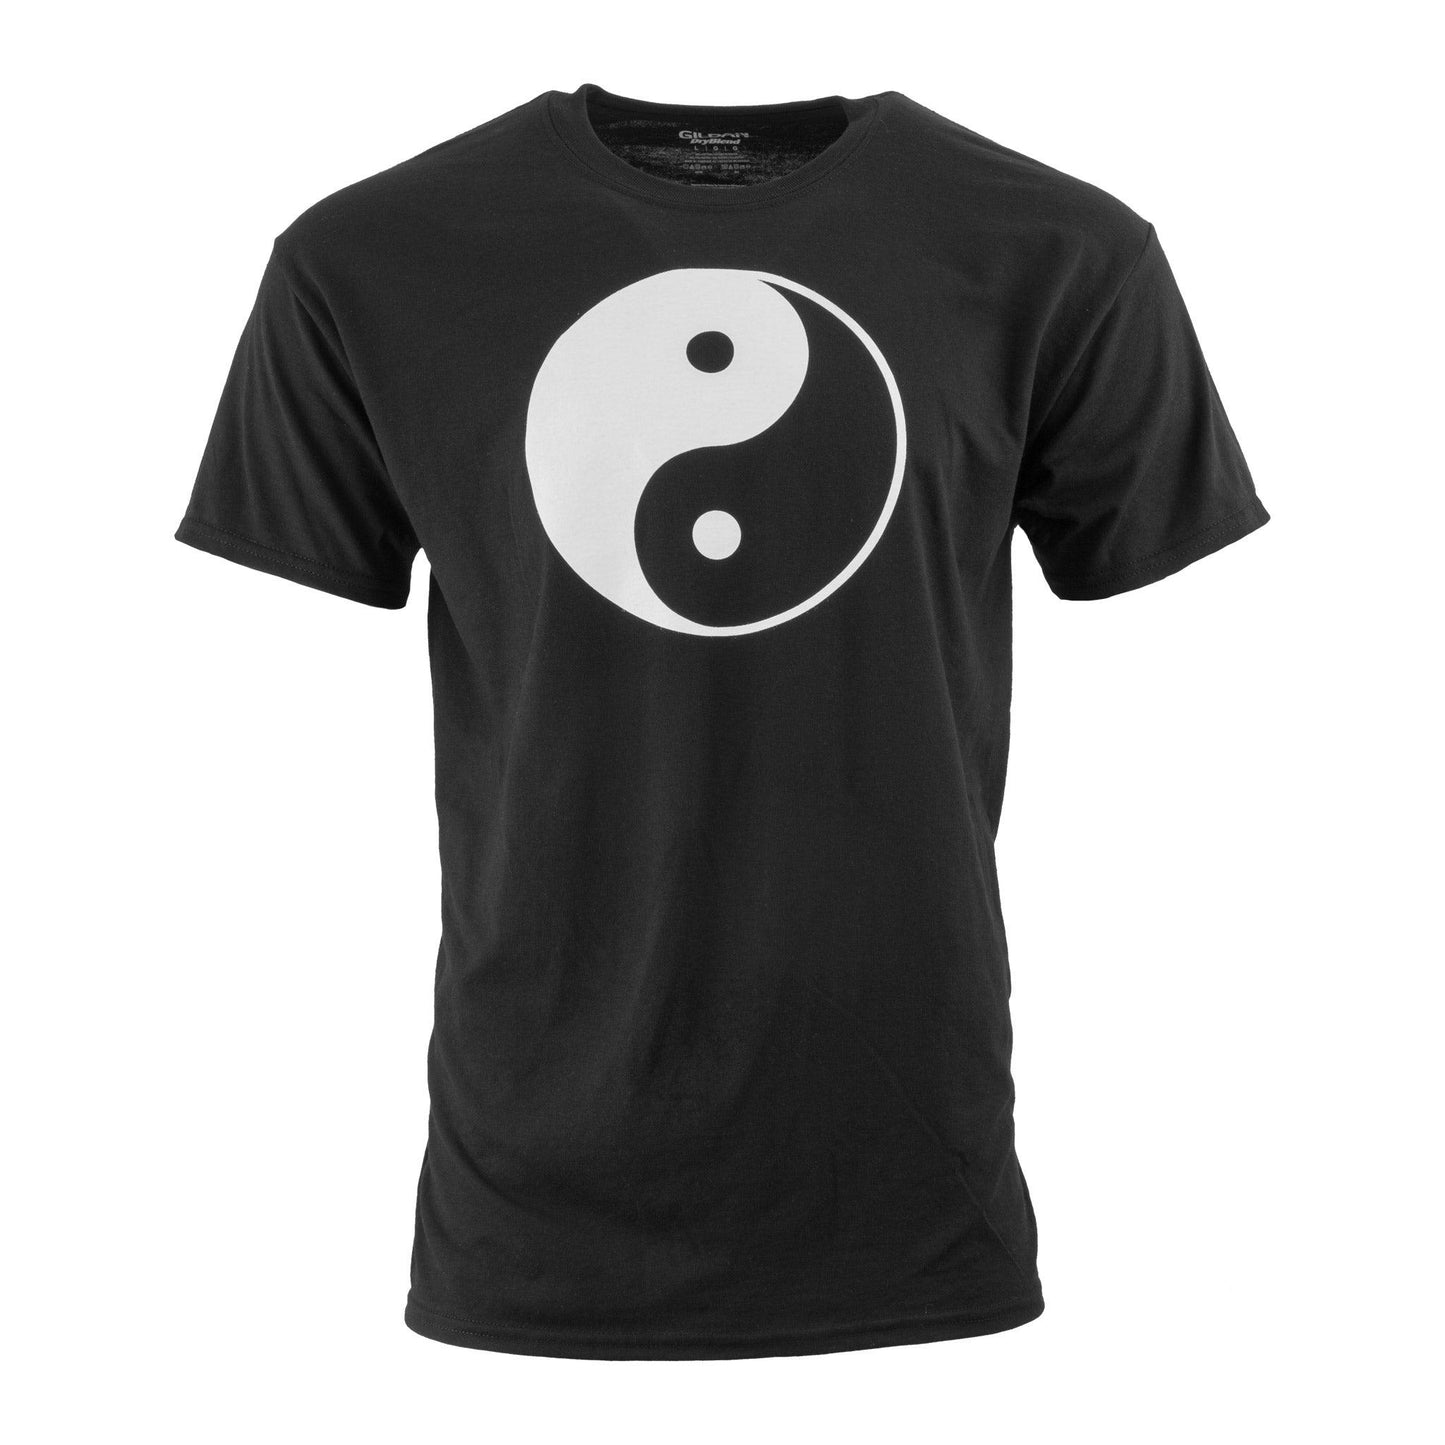 Yin & Yang T-Shirt - Violent Art Shop